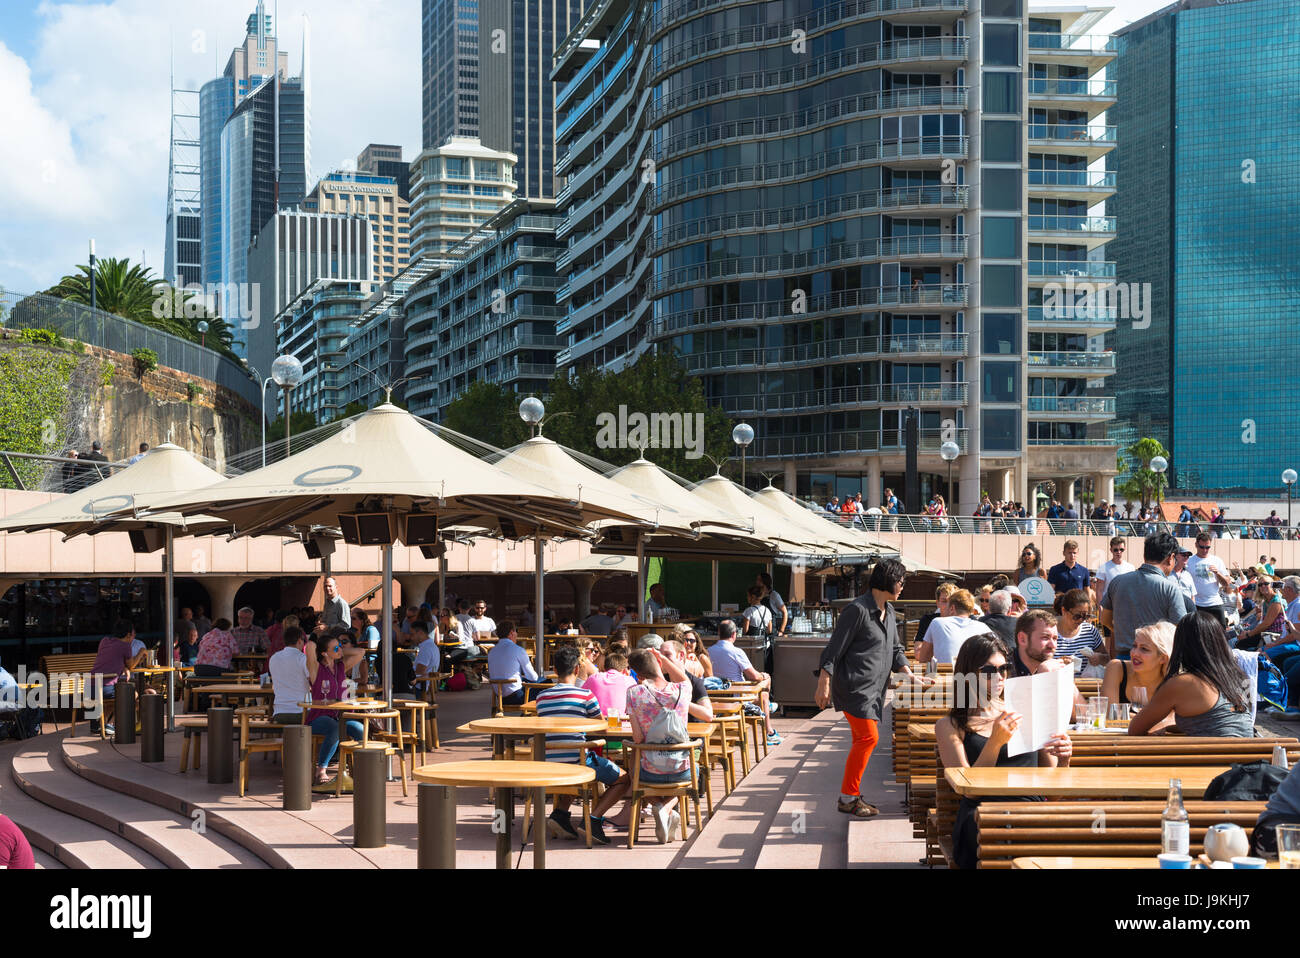 Waterside cafe restaurants on promenade leading to the Opera house in Sydney, NSW, Australia. Stock Photo